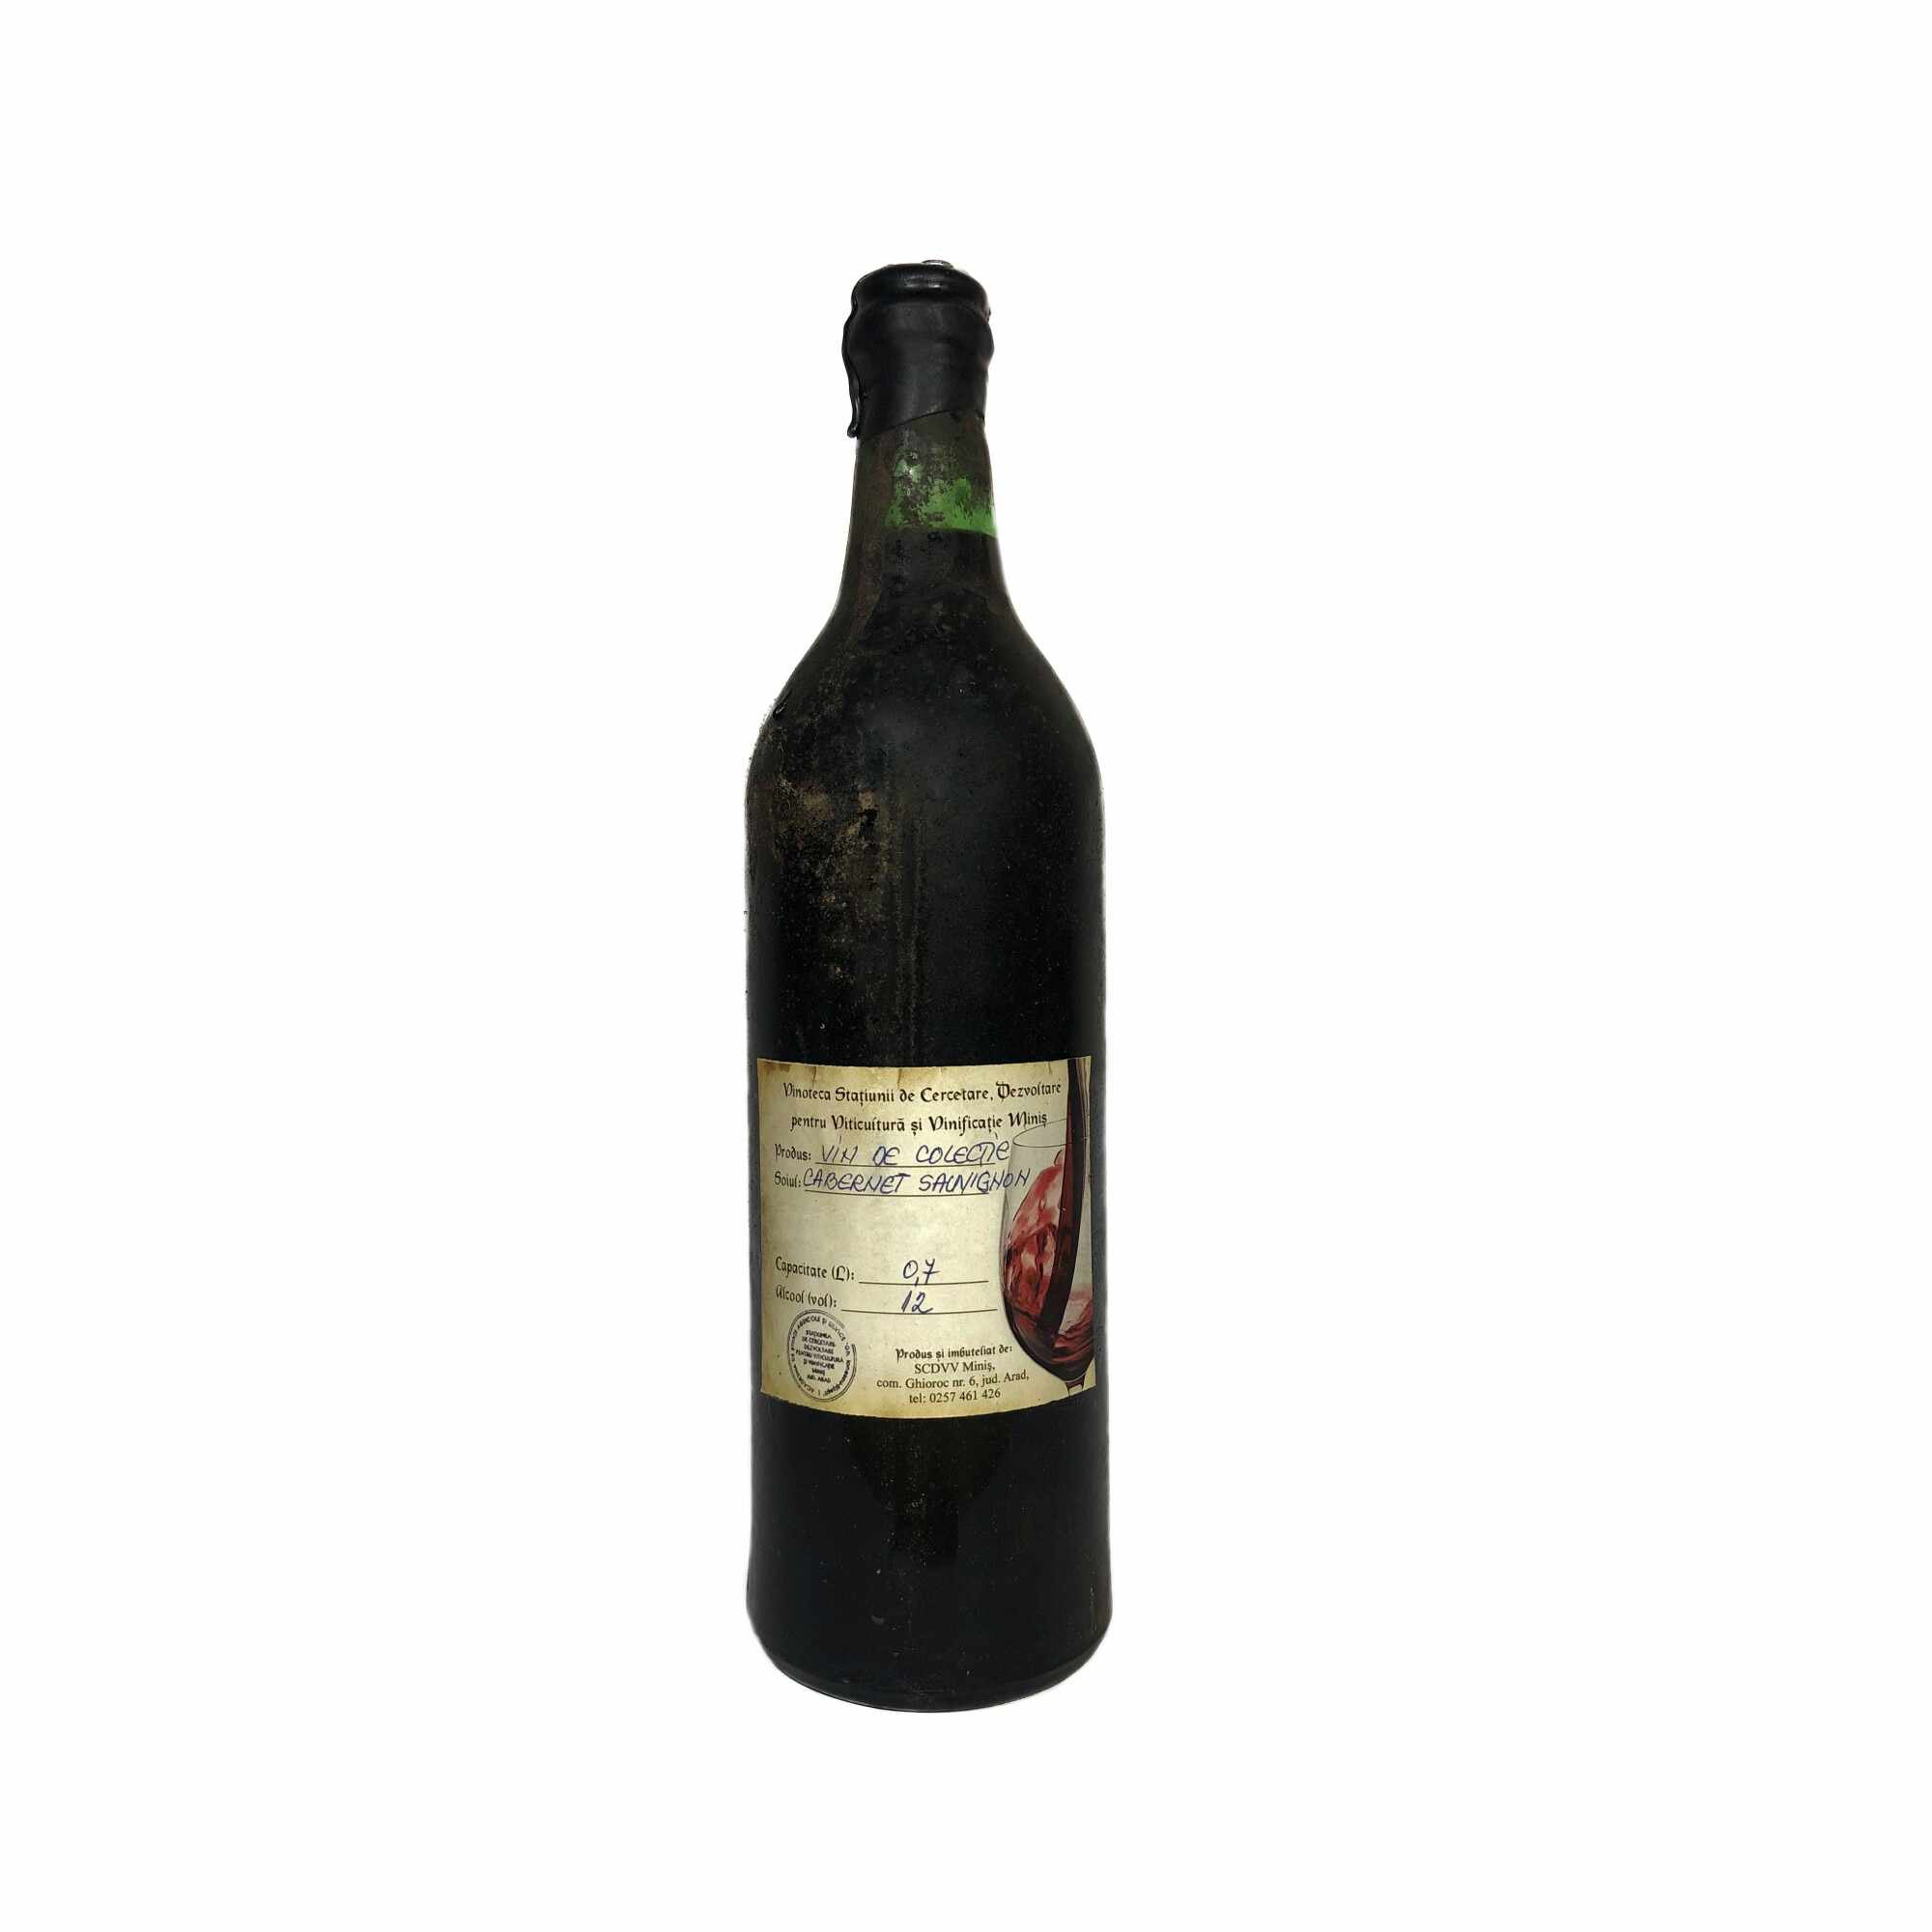 Vin rosu de colectie Cabernet Sauvignon - Anul 1972 in cutie de lemn, 700 ml